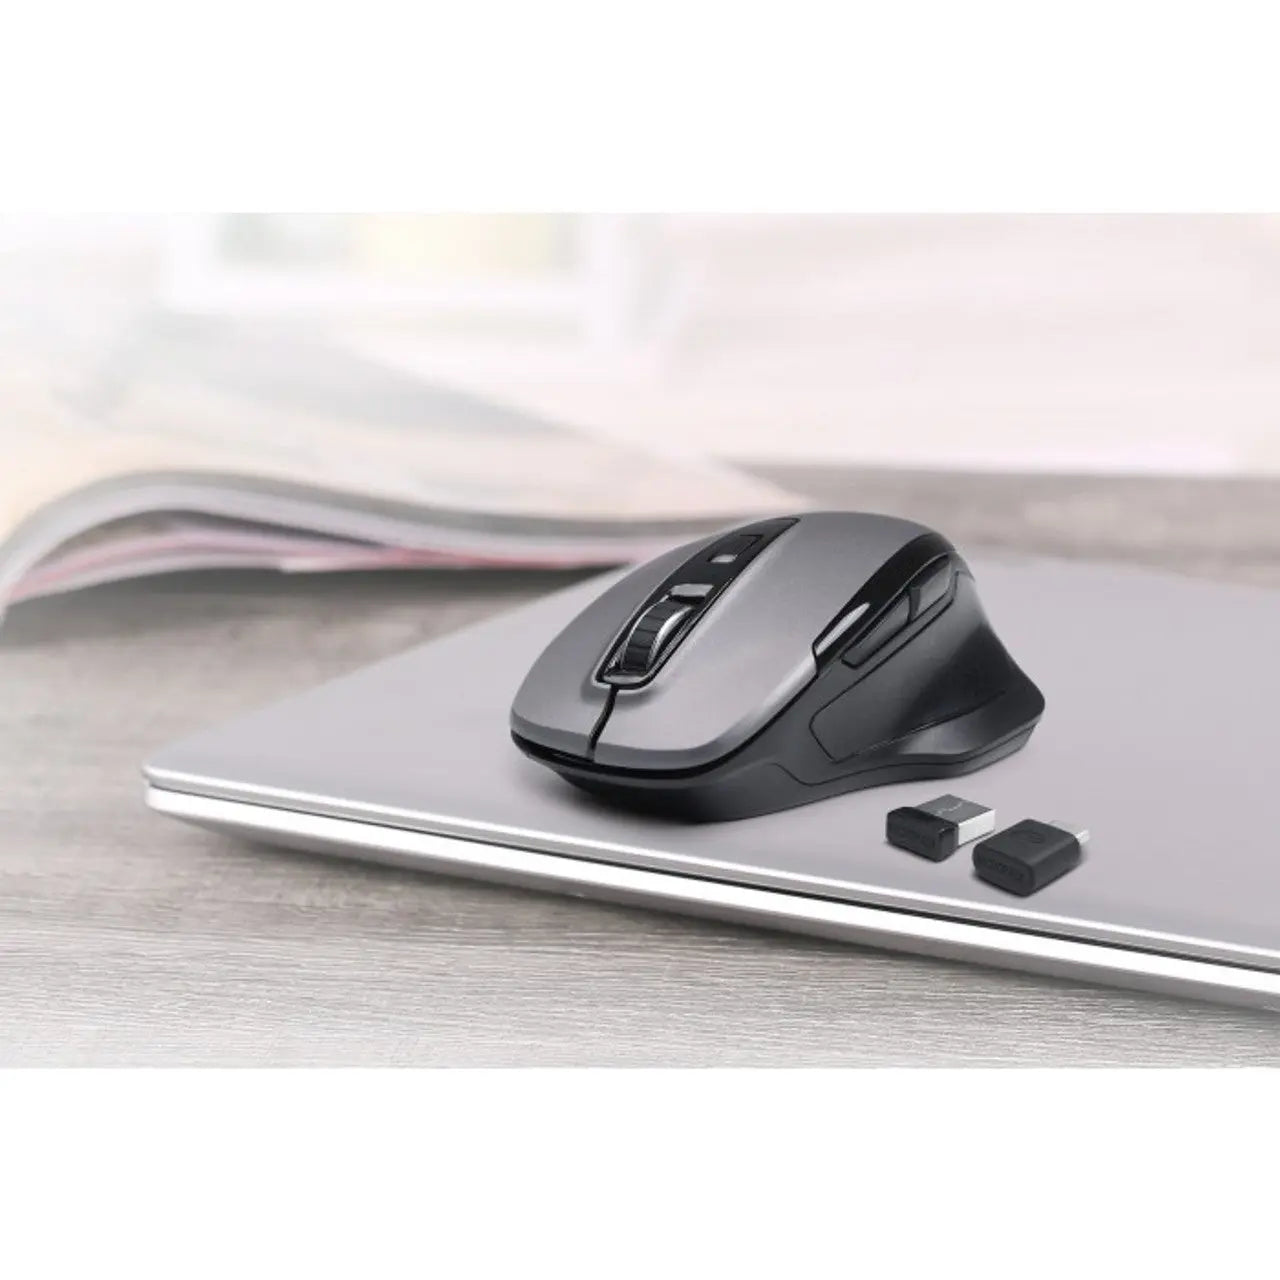 Micropack Speedy Pro Wireless Office Mouse, Grey | M-752W Micropack